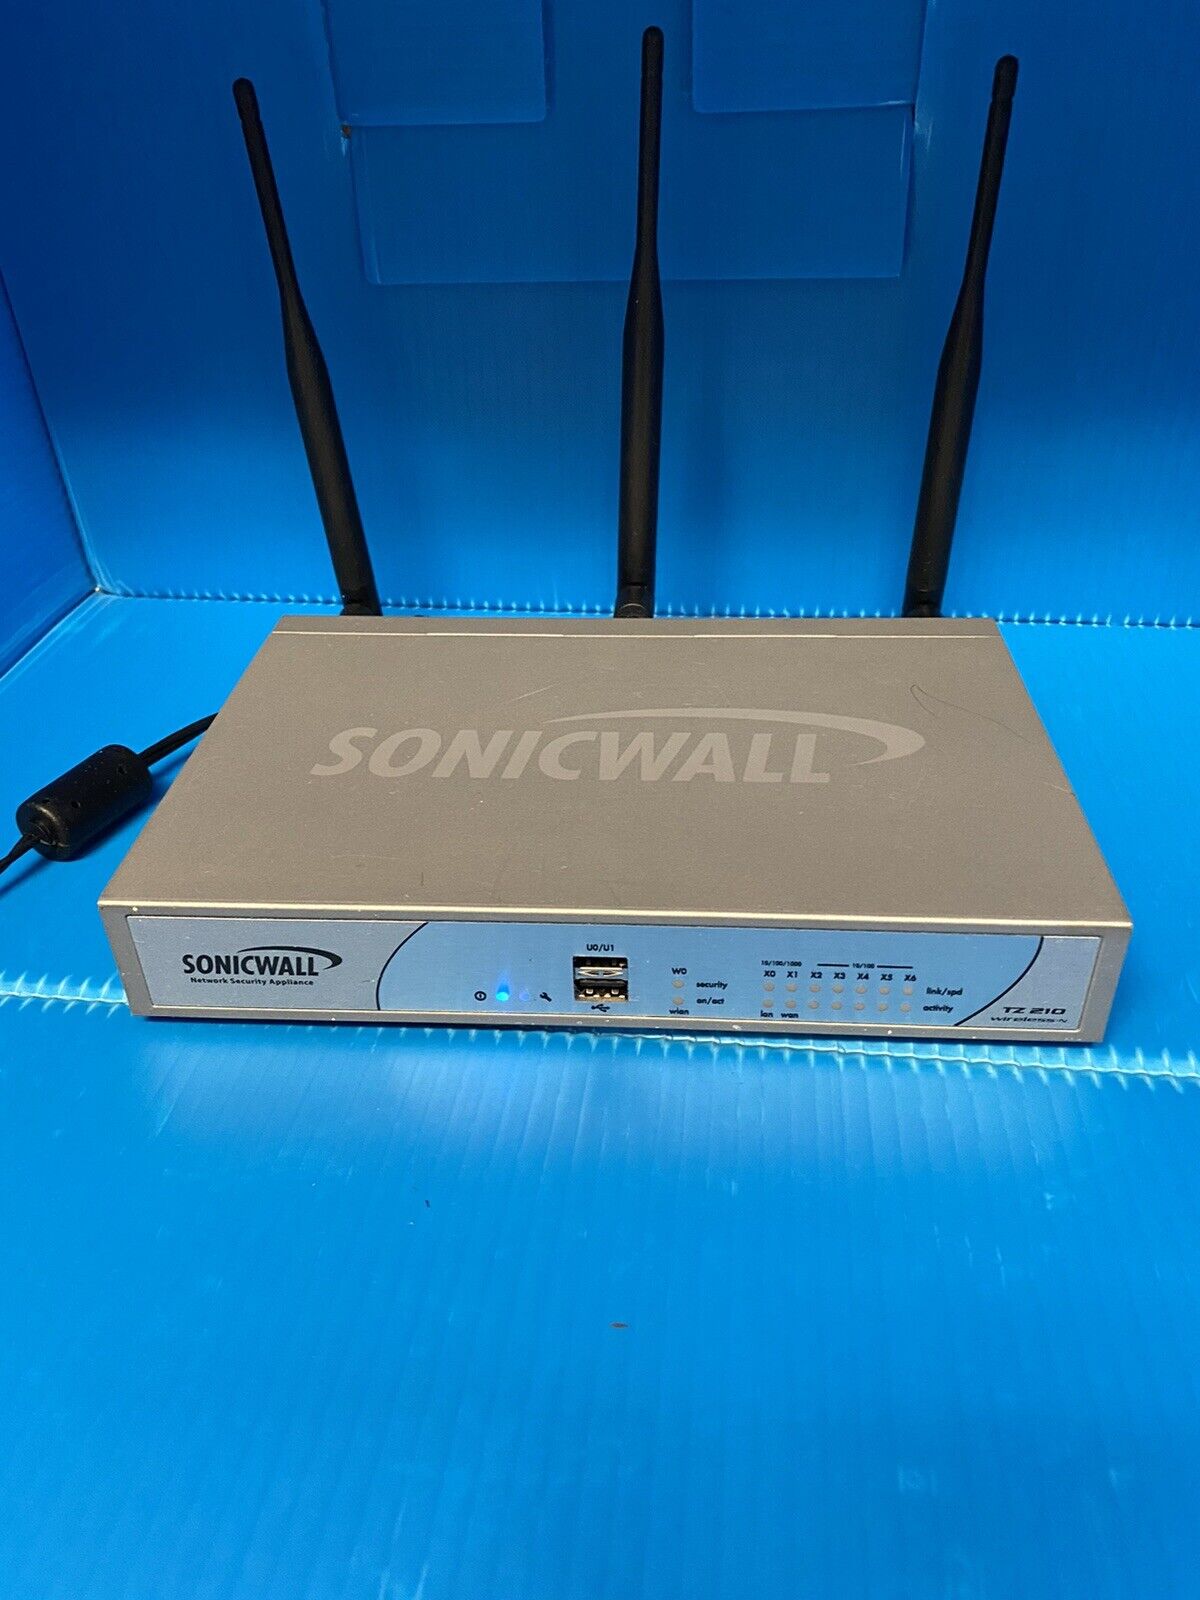 SonicWall TZ 210 Wireless-N APL20-065 WLAN Network Security Firewall